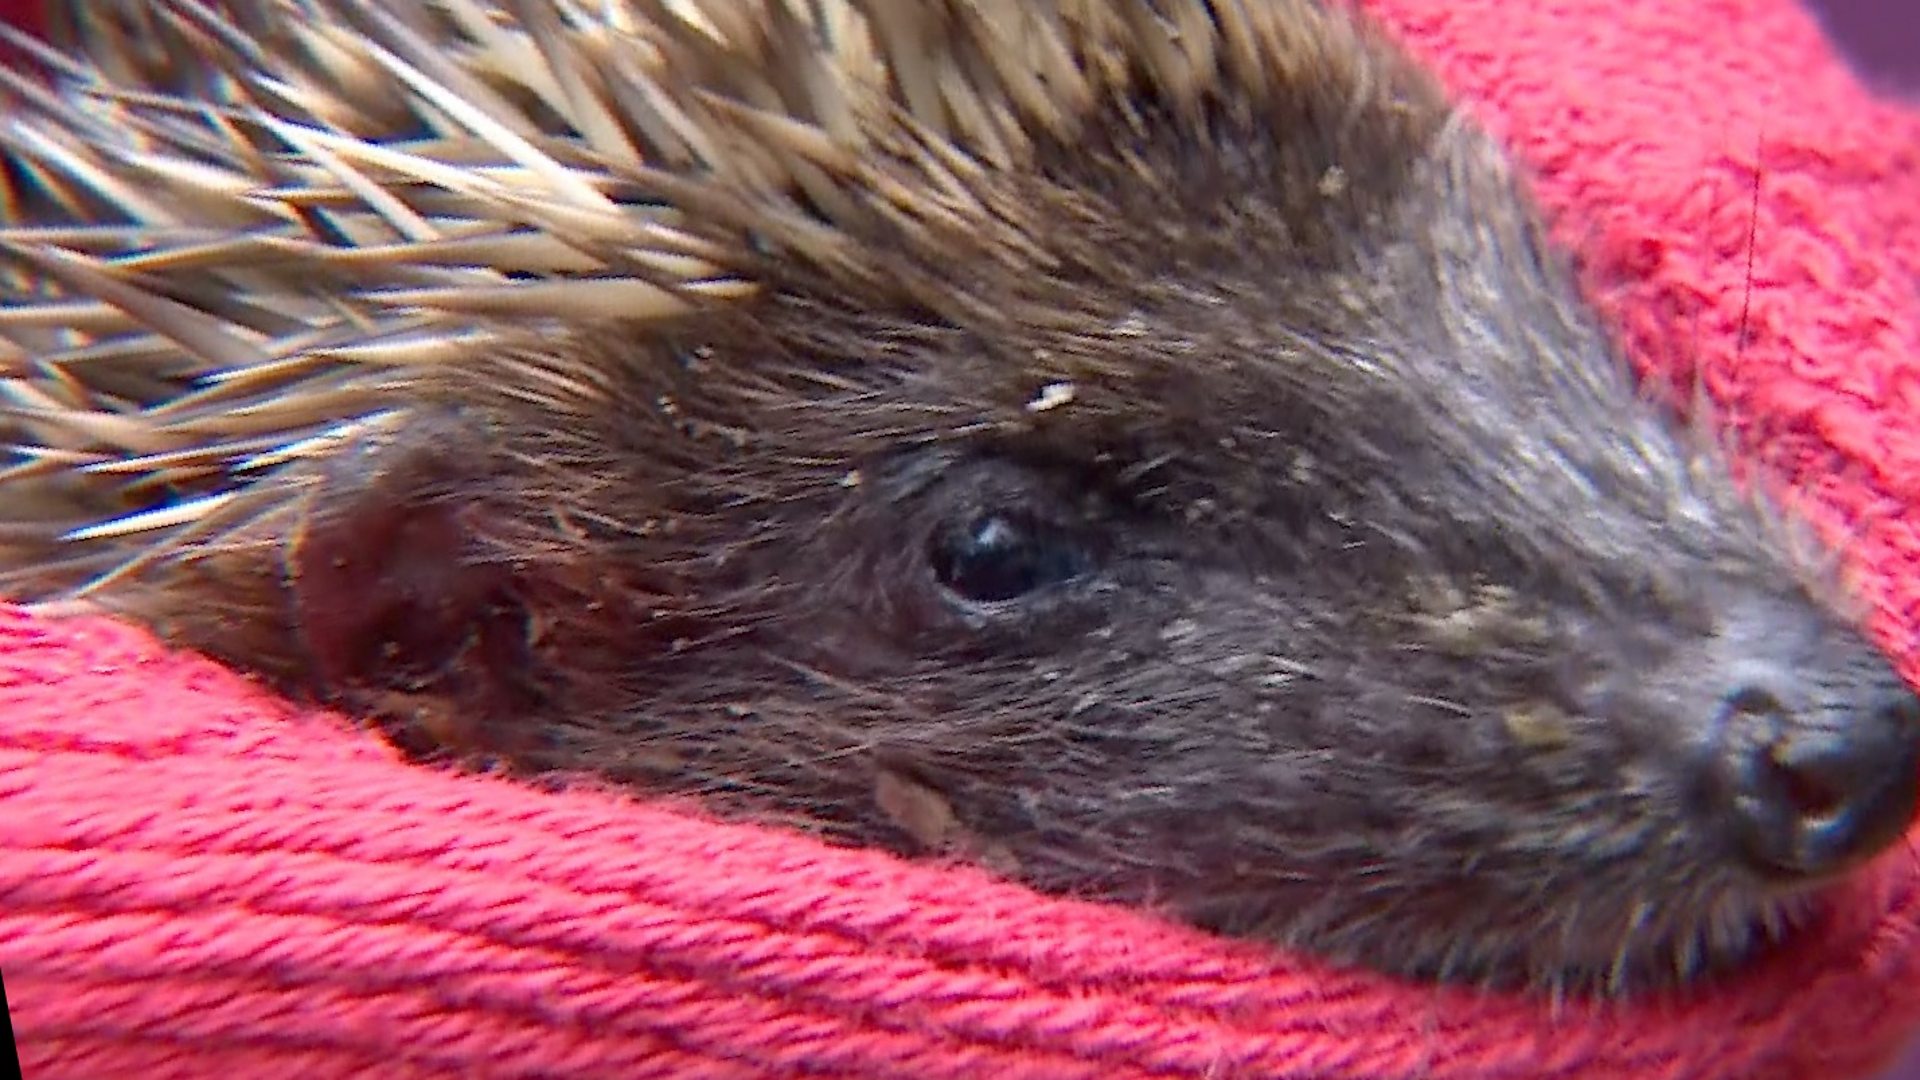 Norfolk animal sanctuary inundated with injured hedgehogs - BBC News